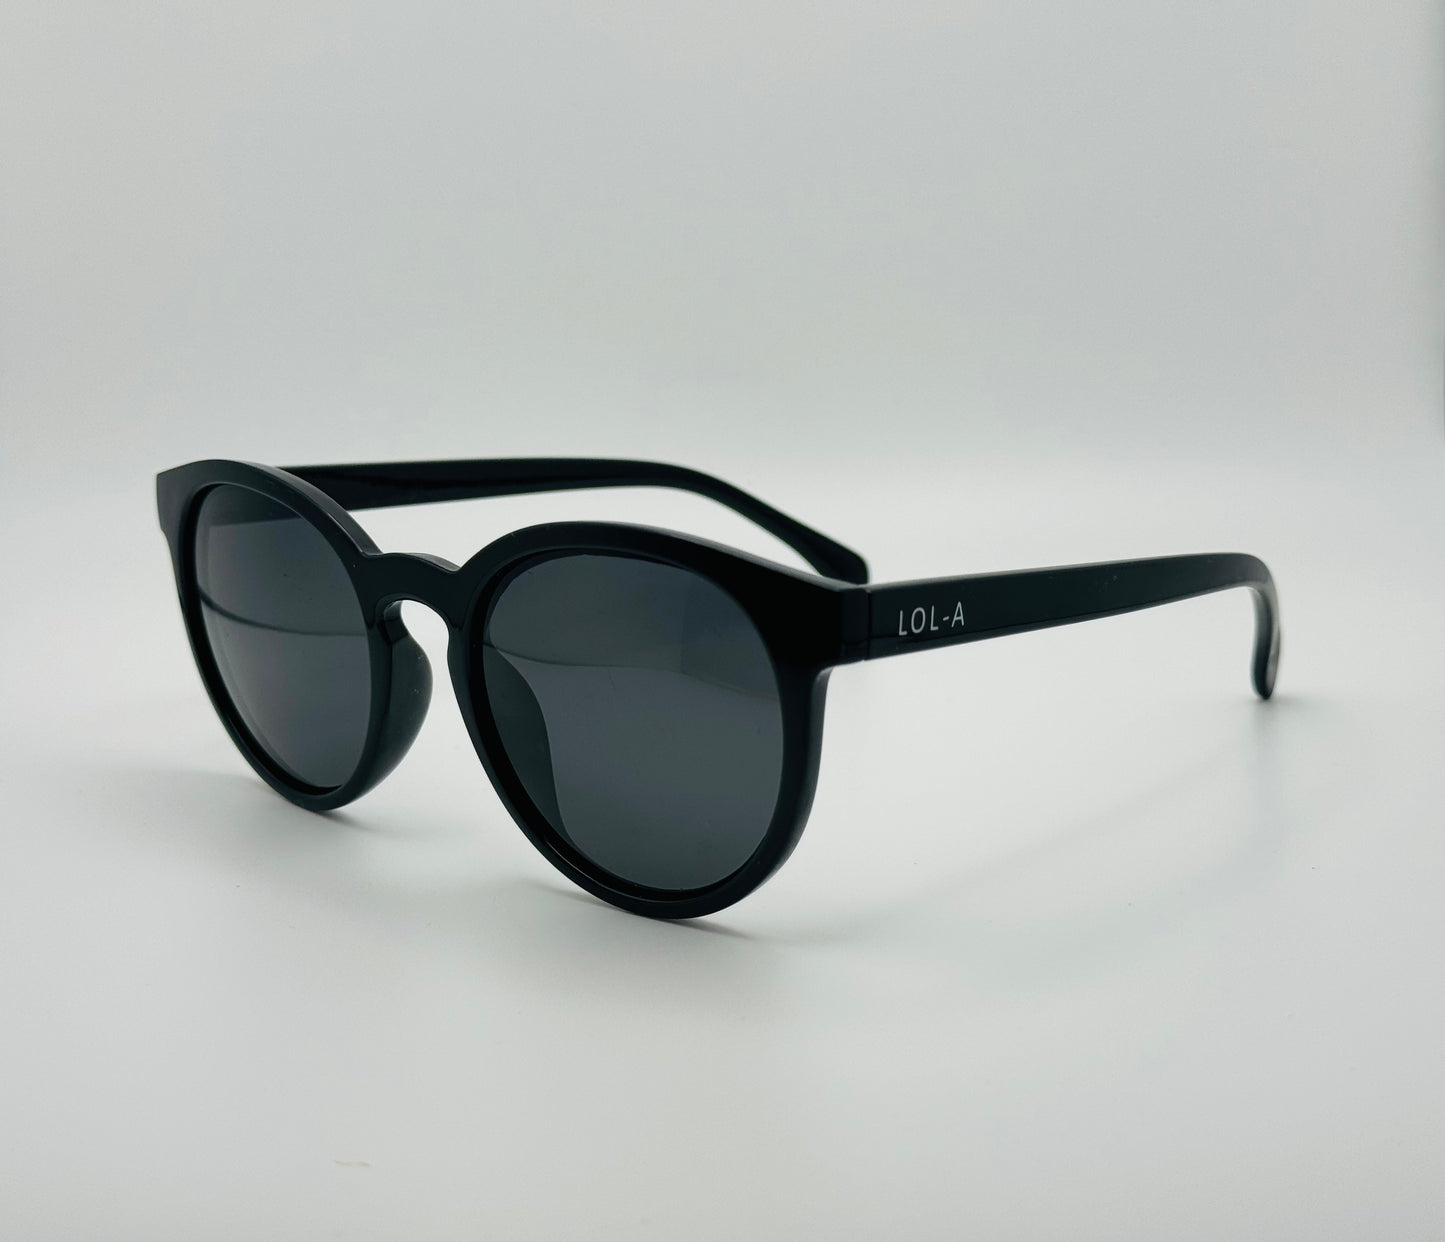 “NERO” Sunglasses